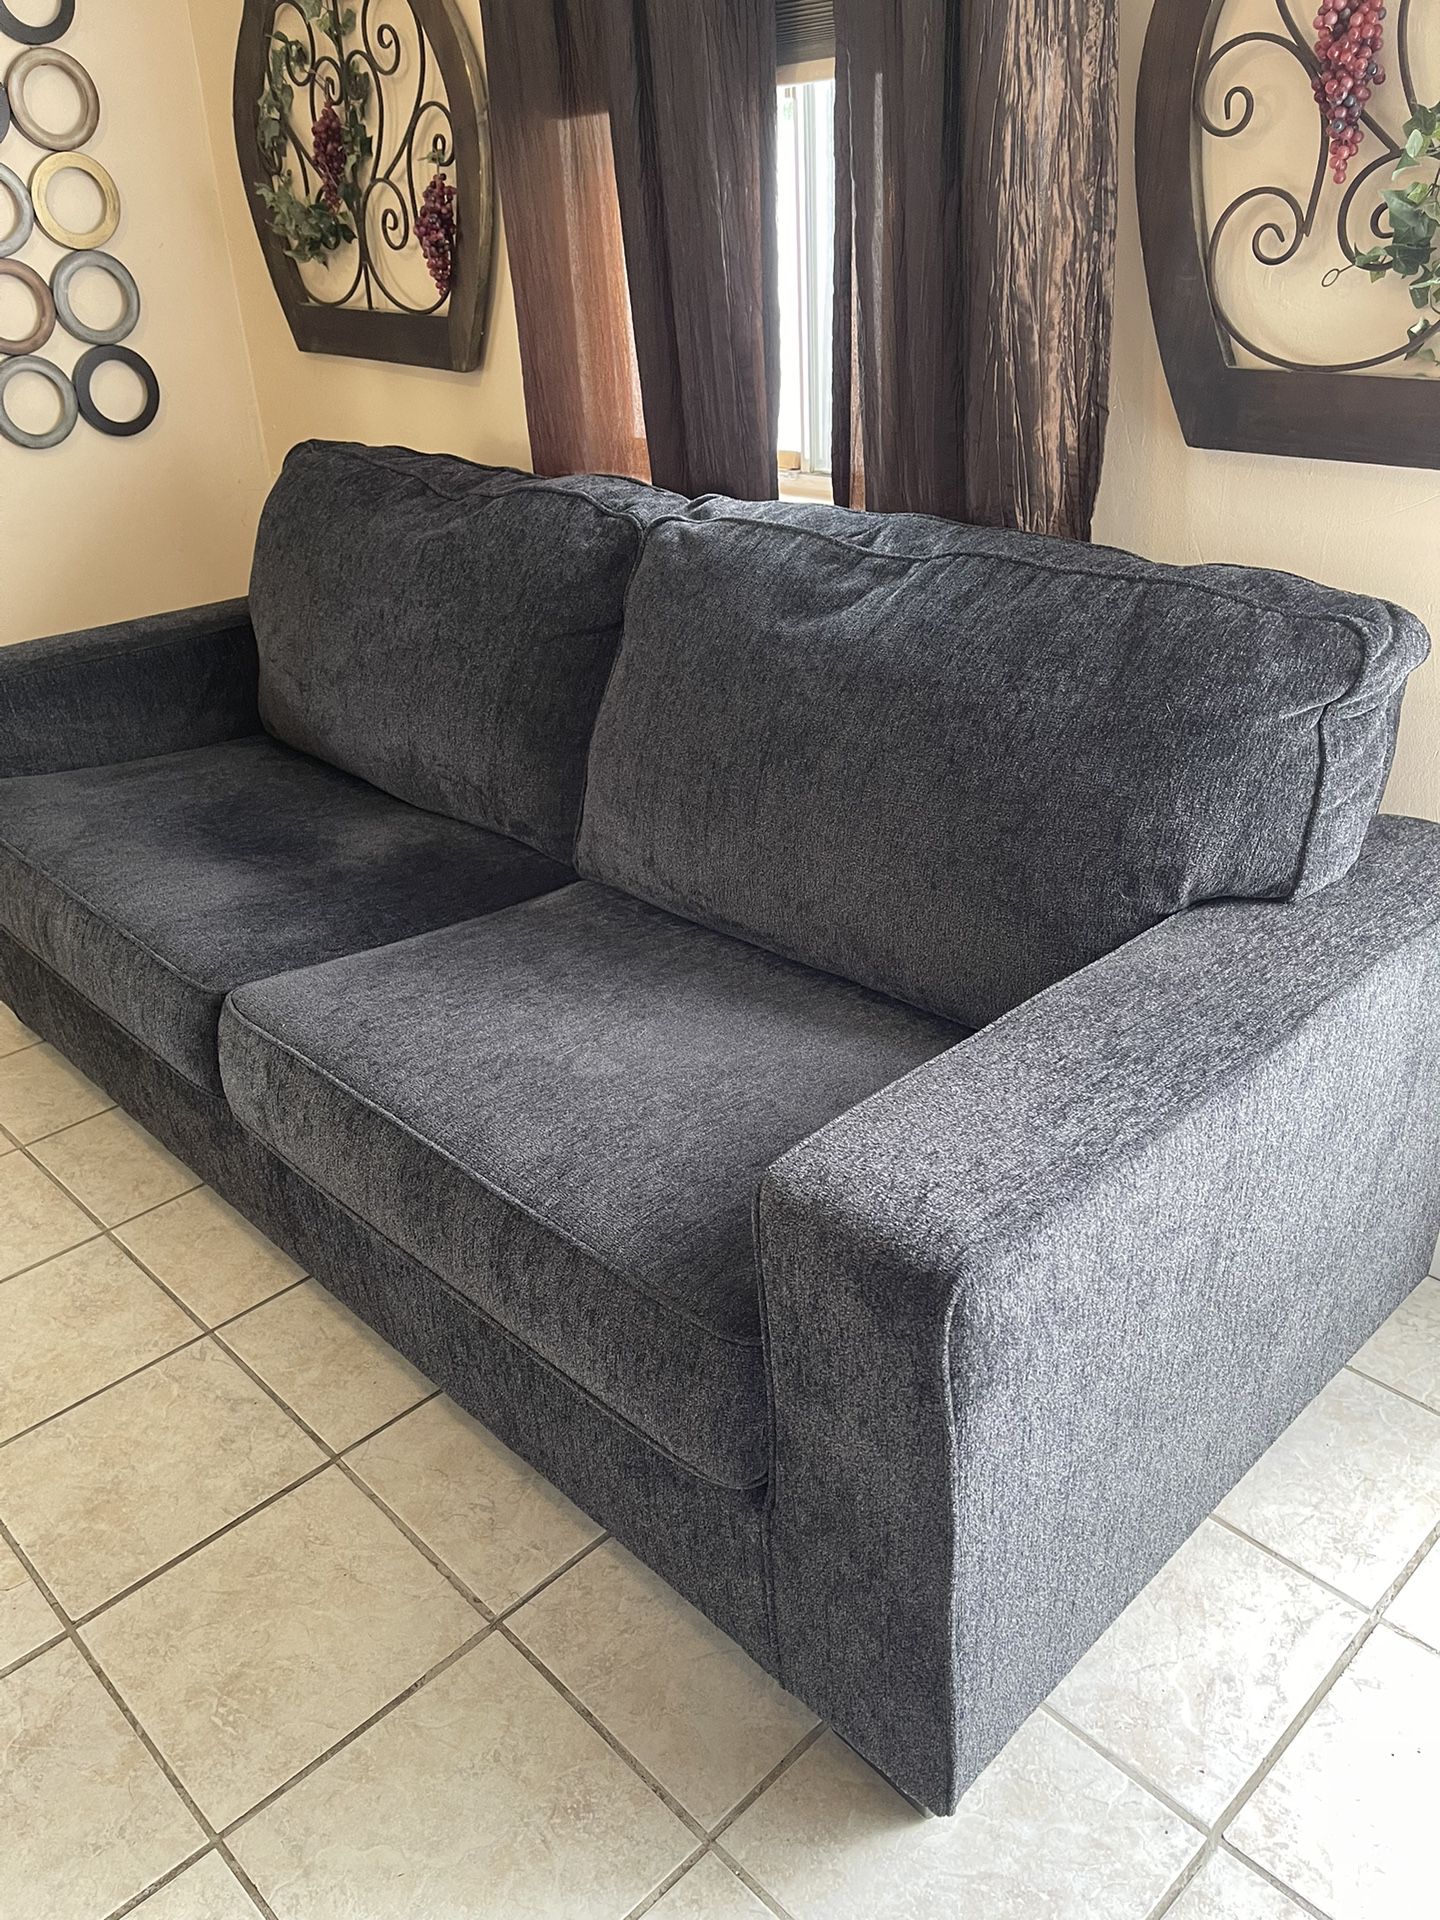 NEW black sofa!